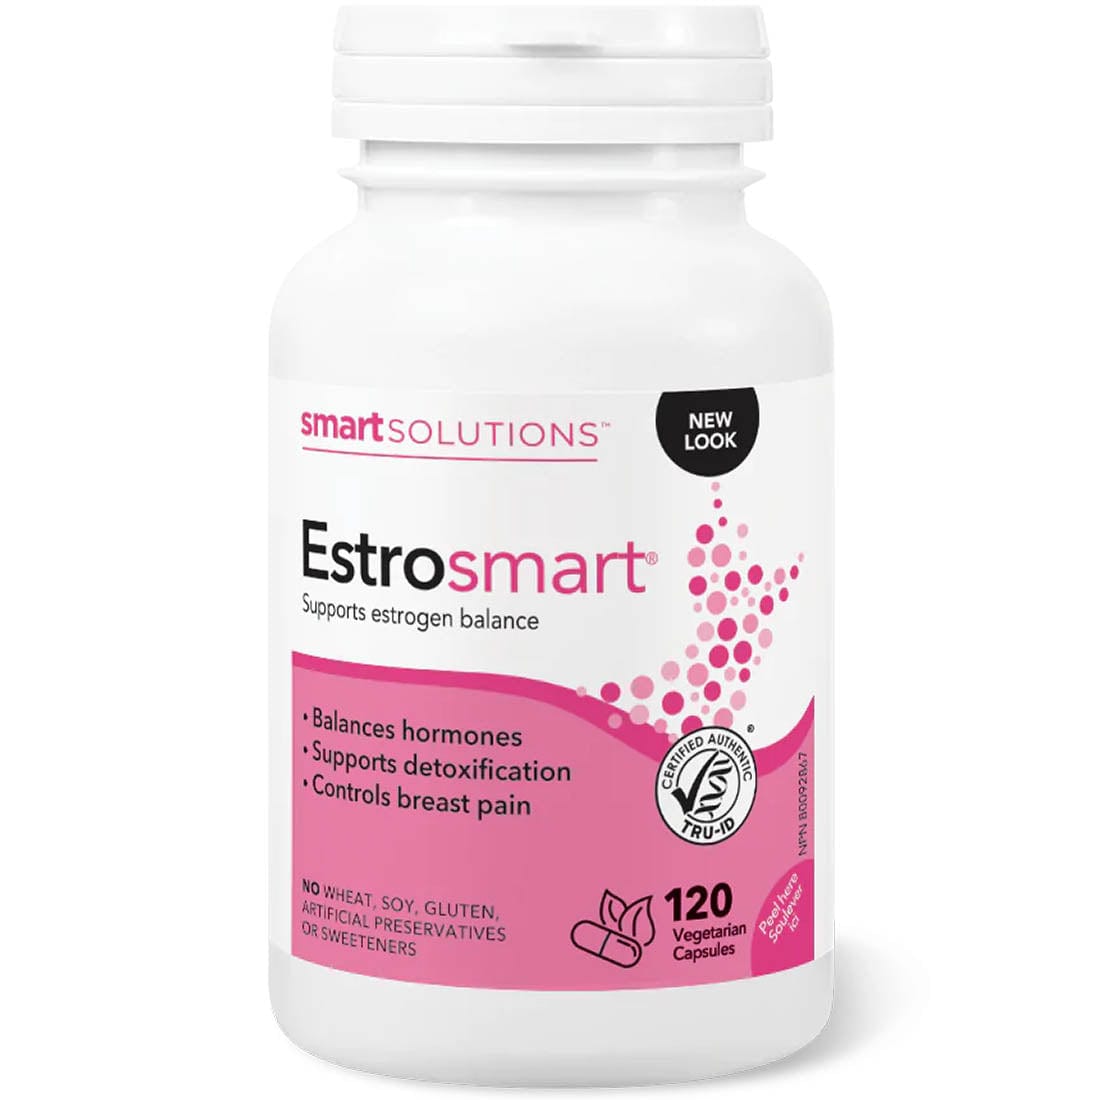 Smart Solutions Estrosmart, Estrogen balance, detoxification, controls breast pain (Formerly Lorna Vanderhaeghe Estrosmart)